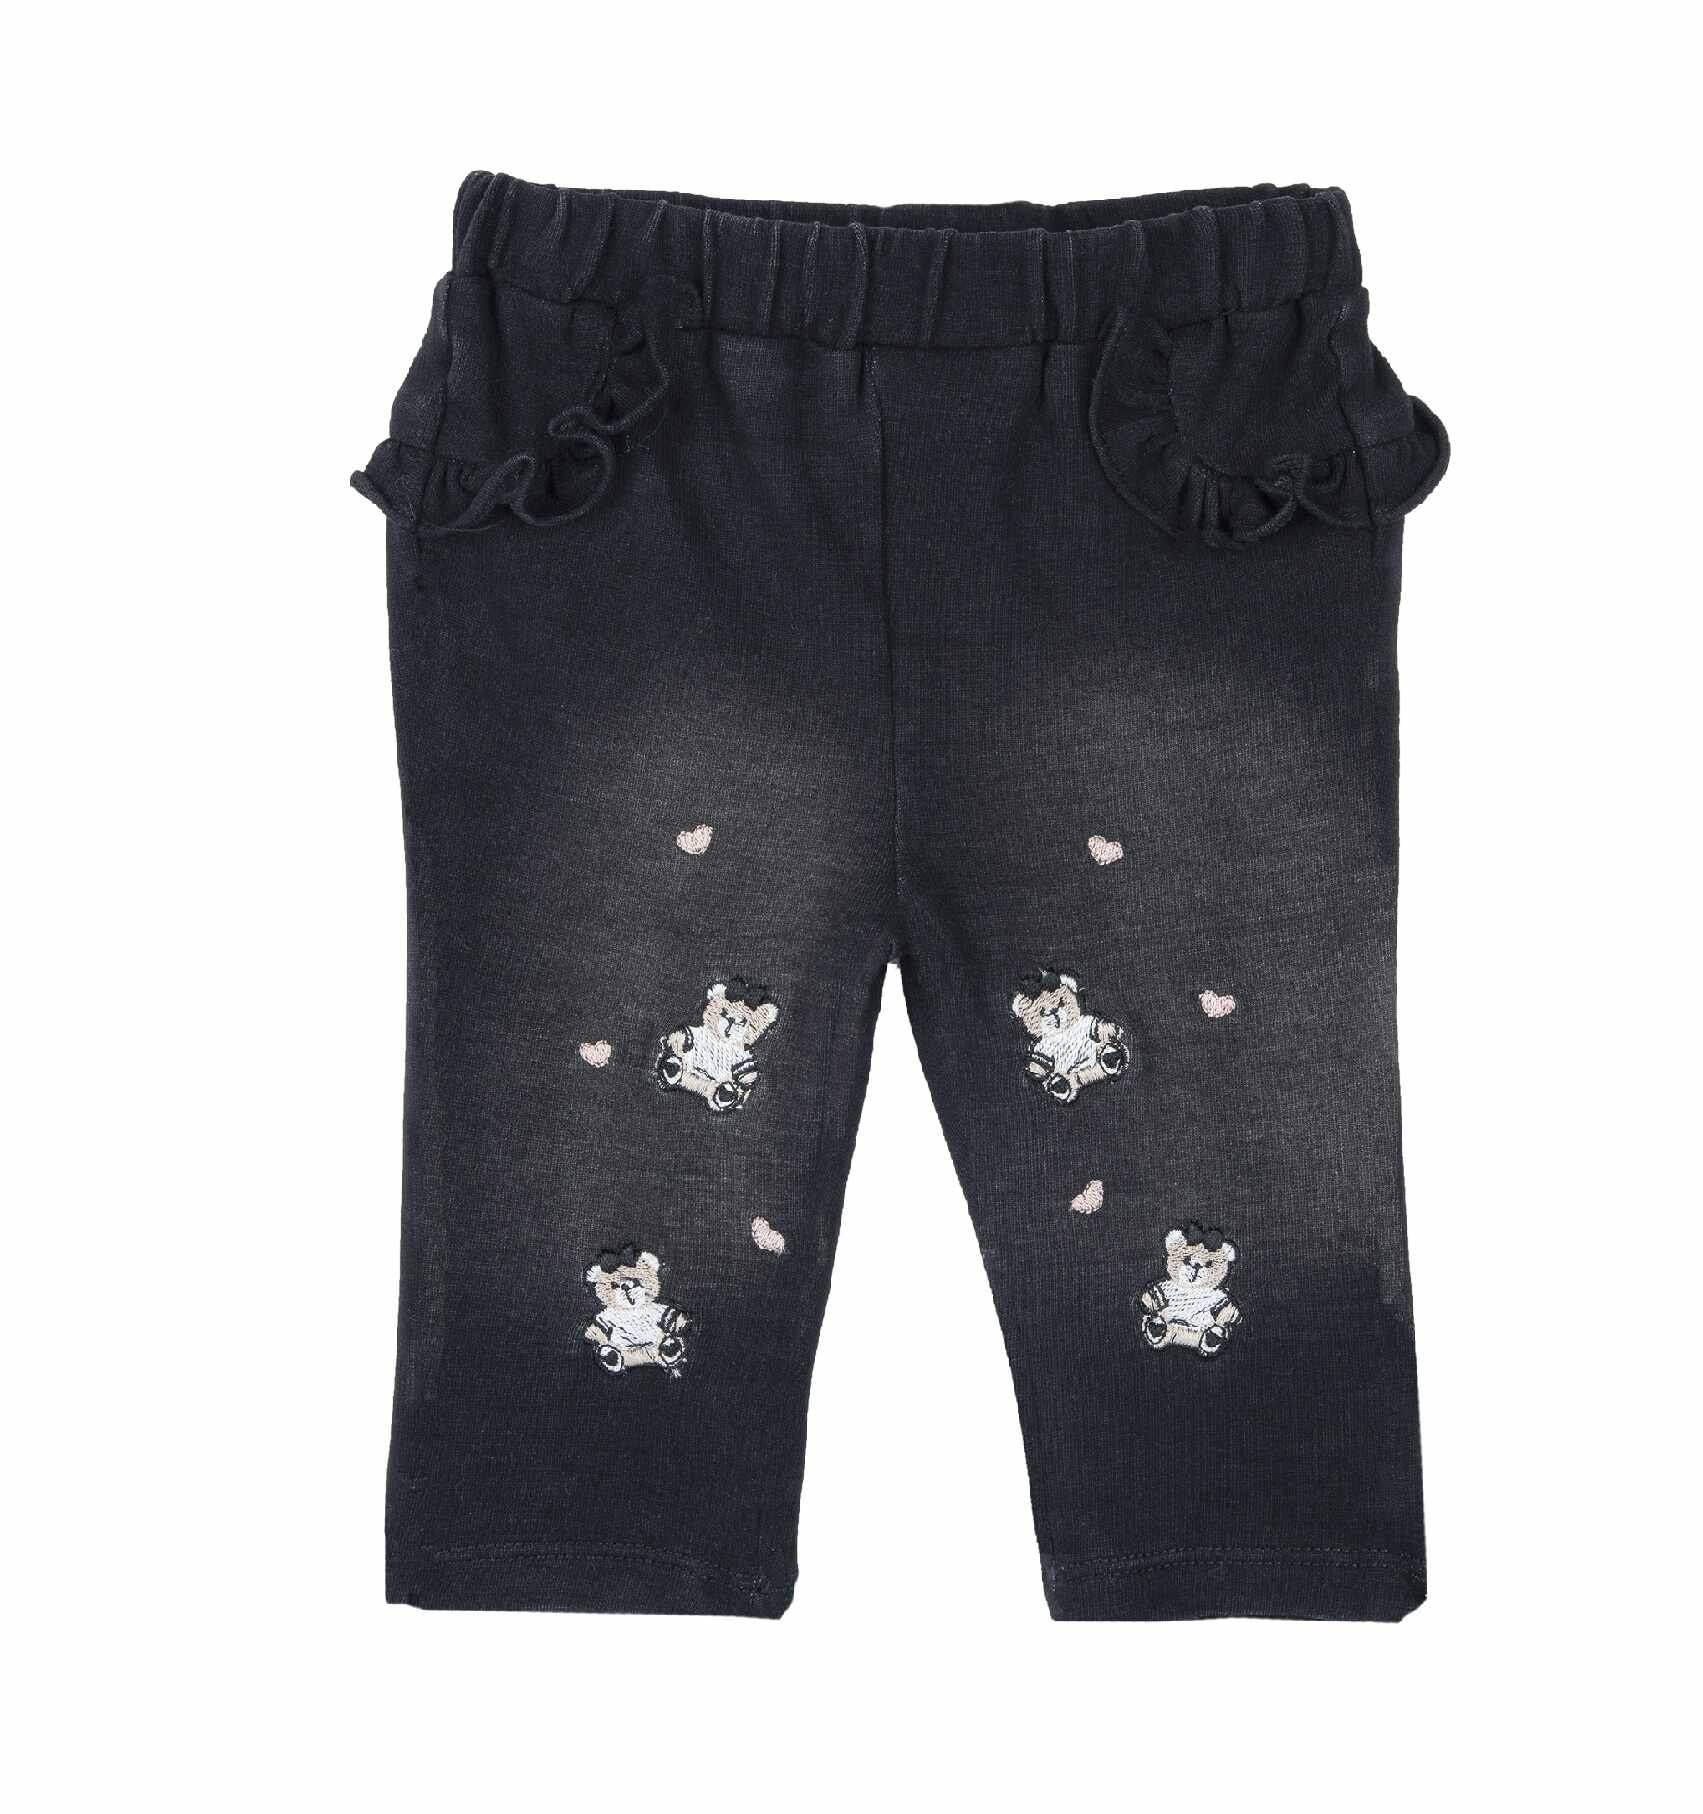 Pantaloni copii Chicco, gri inchis, 08734-63MFCO